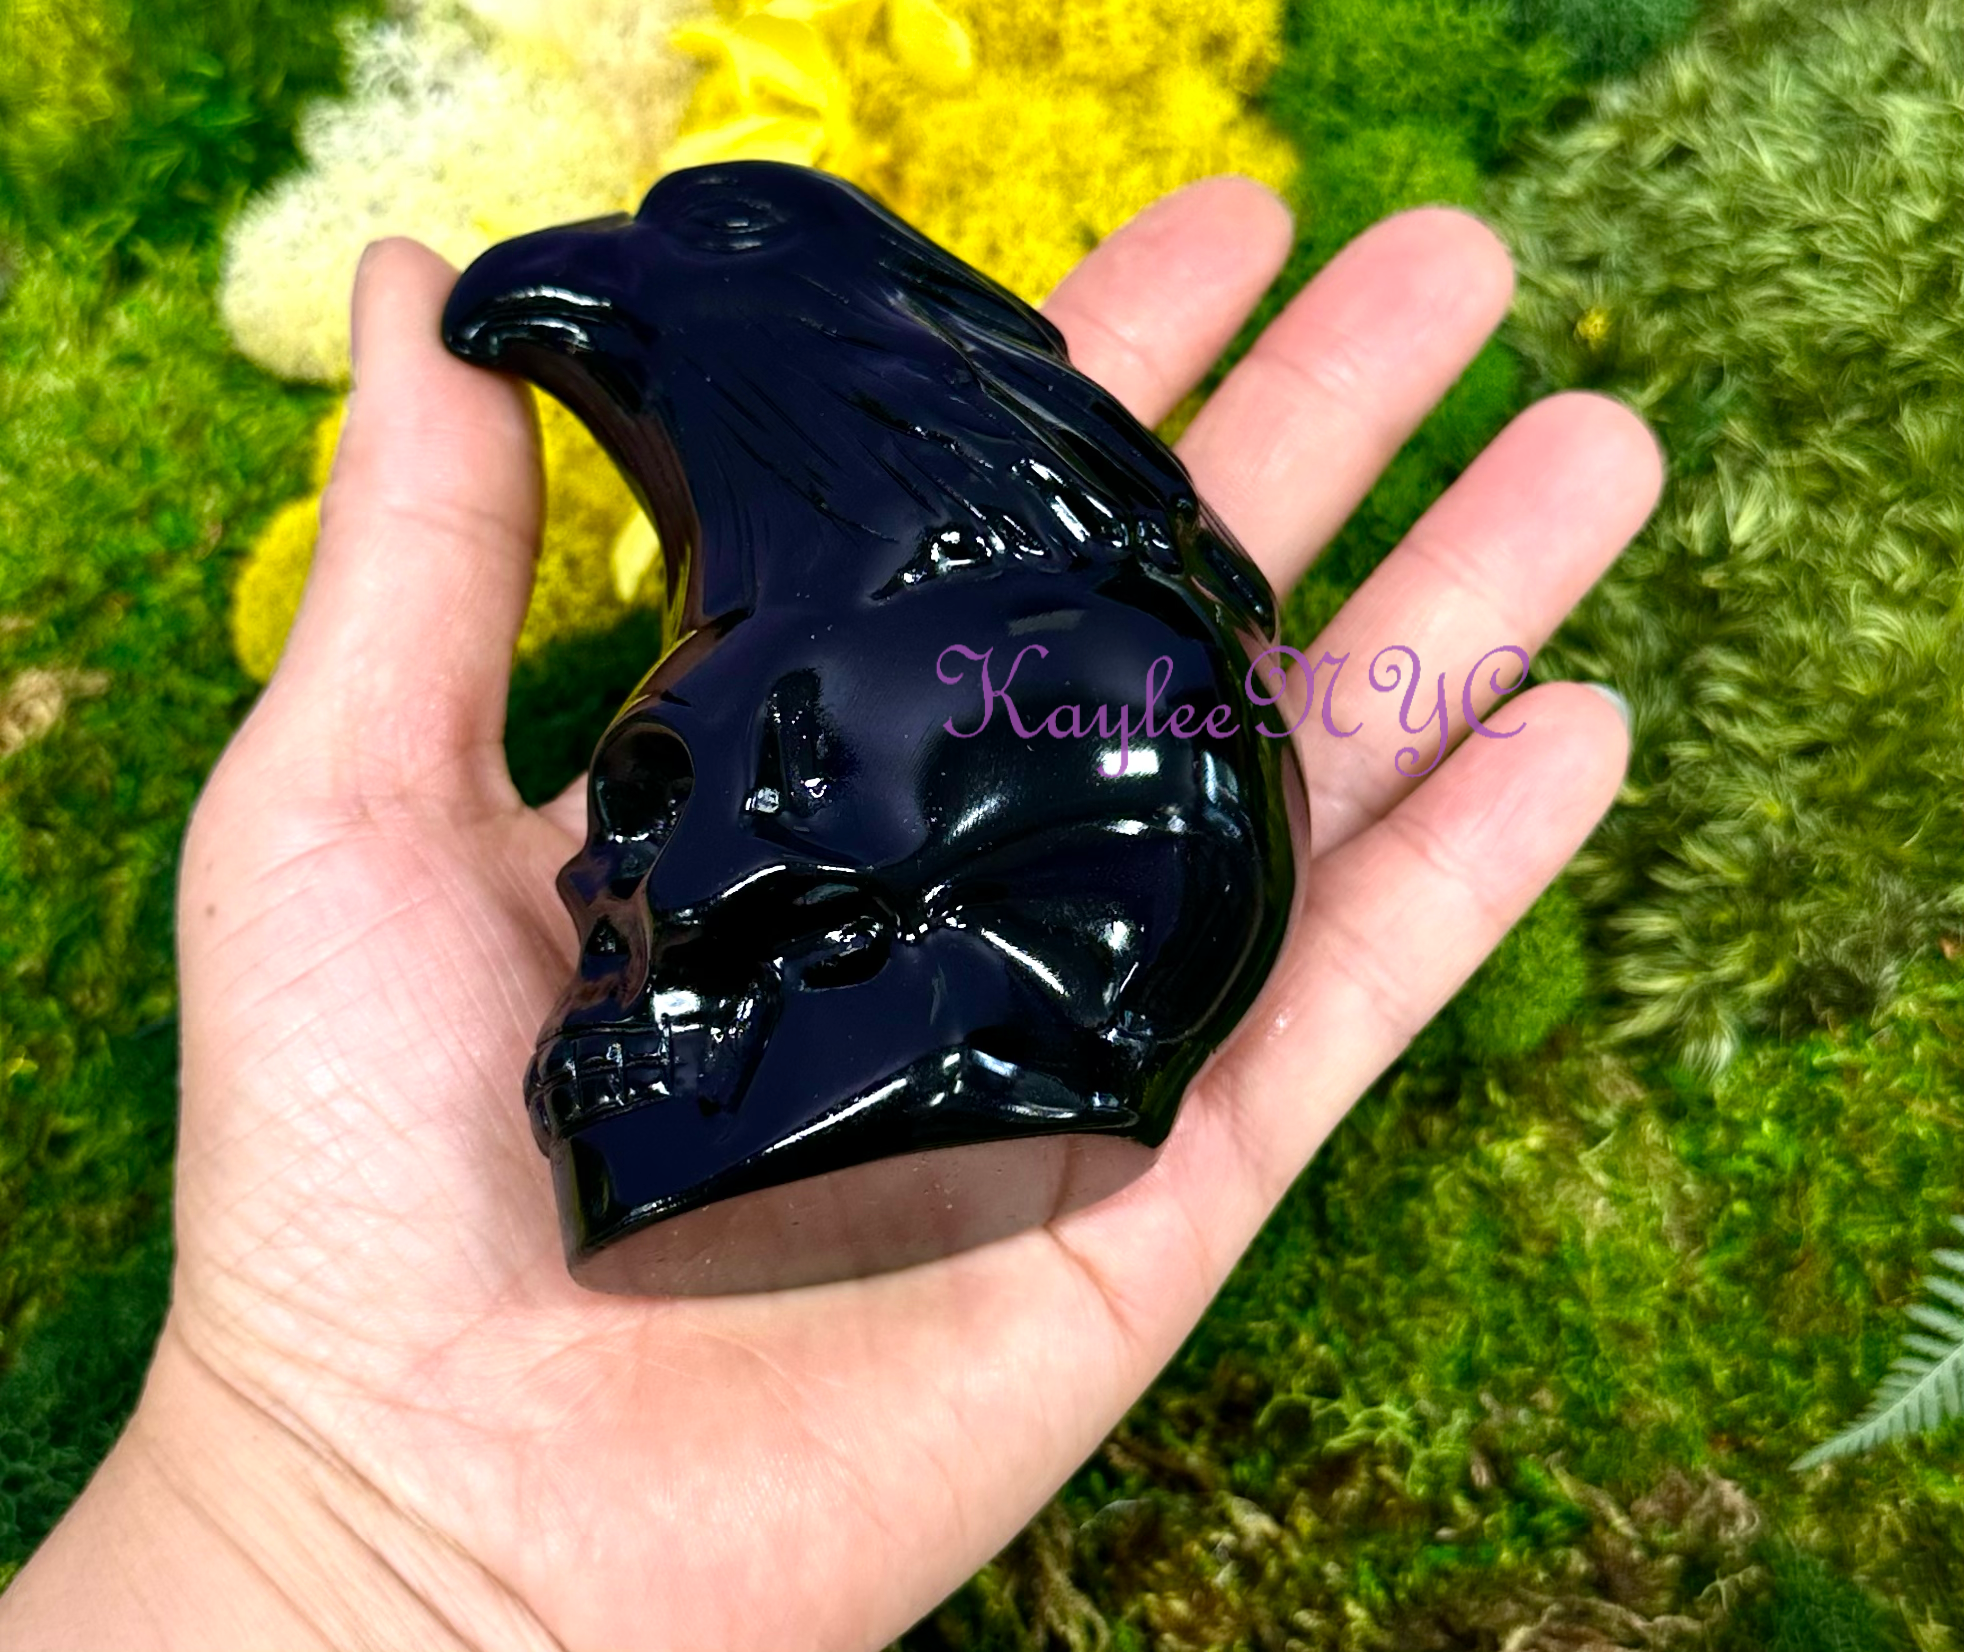 Obsidian Eagle Skull